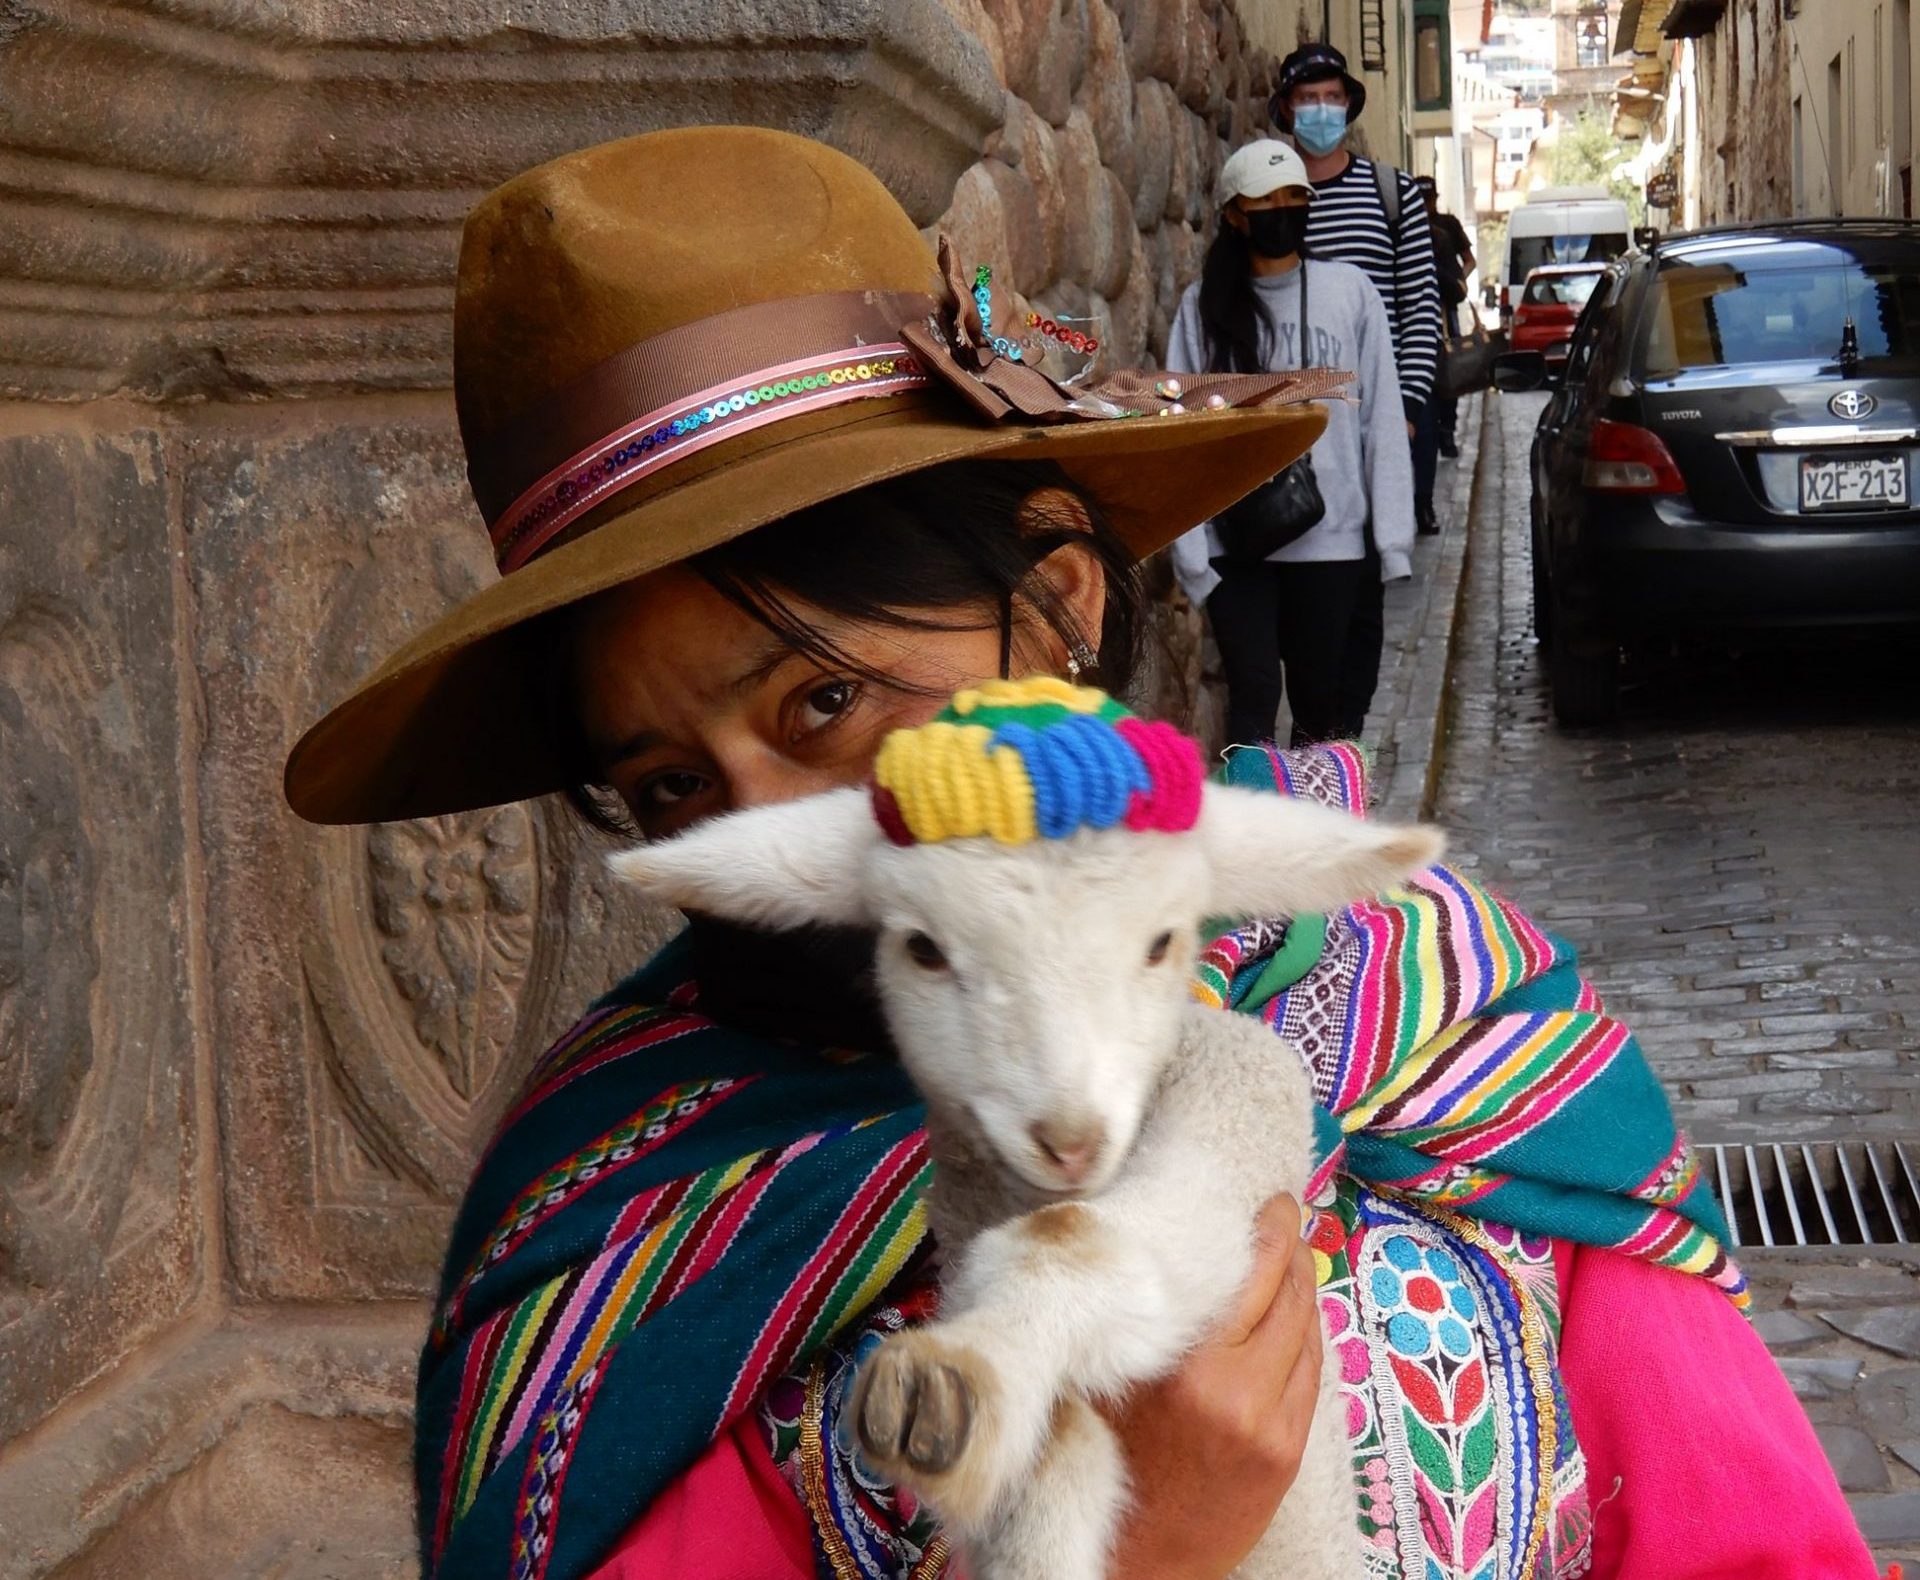 PERU Cuzco i chciałabym tam wrocić